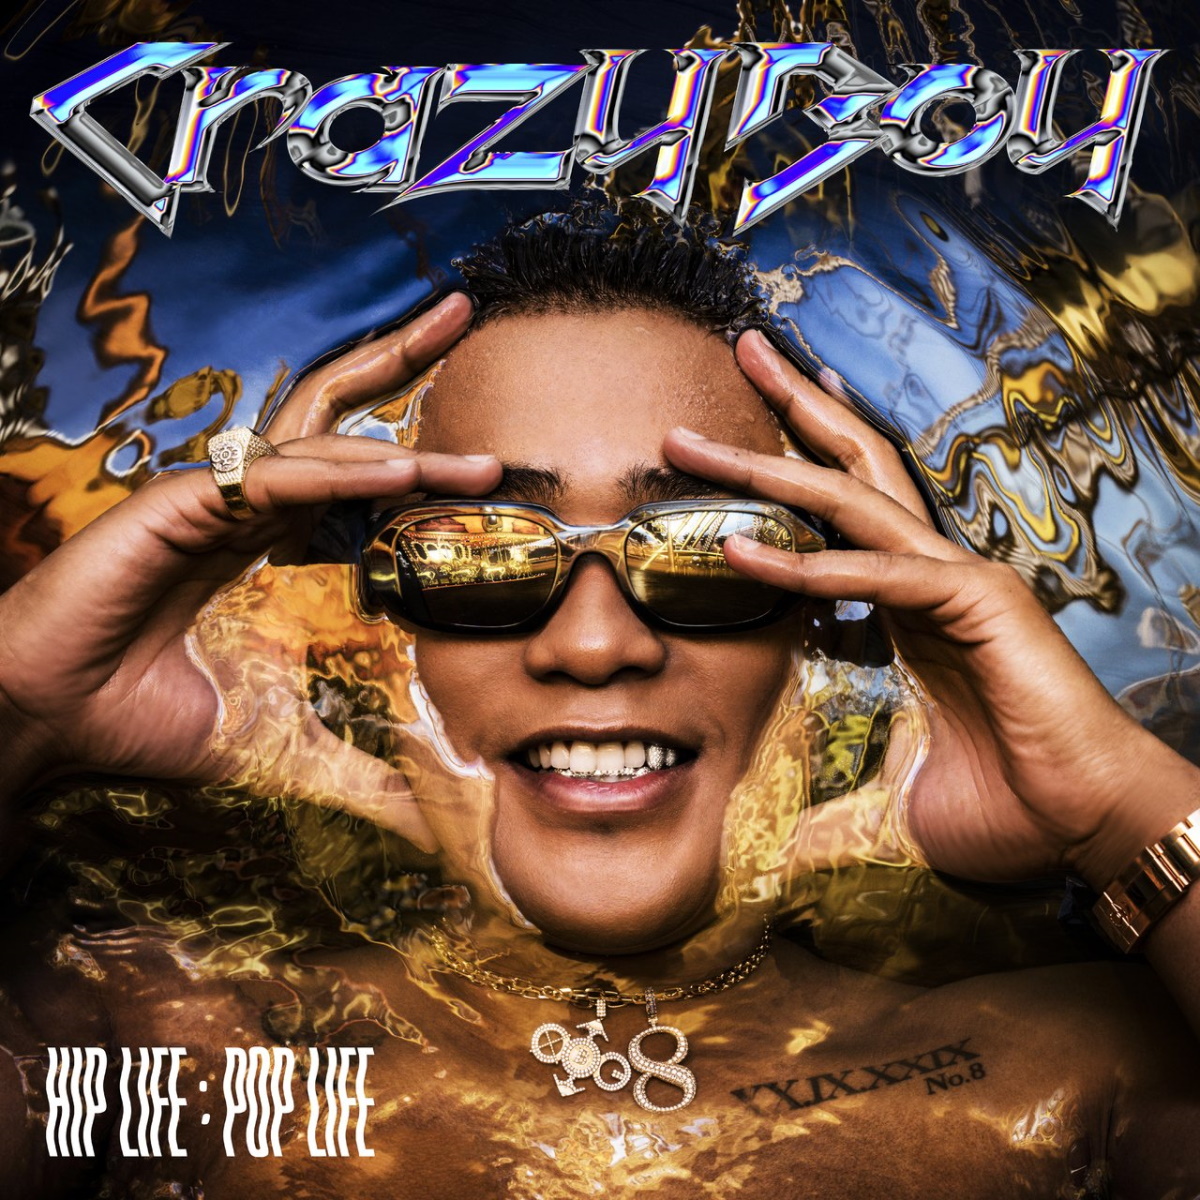 『CrazyBoy - Ex-GIRLFRIEND / Lovers Again』収録の『HIP LIFE：POP LIFE』ジャケット